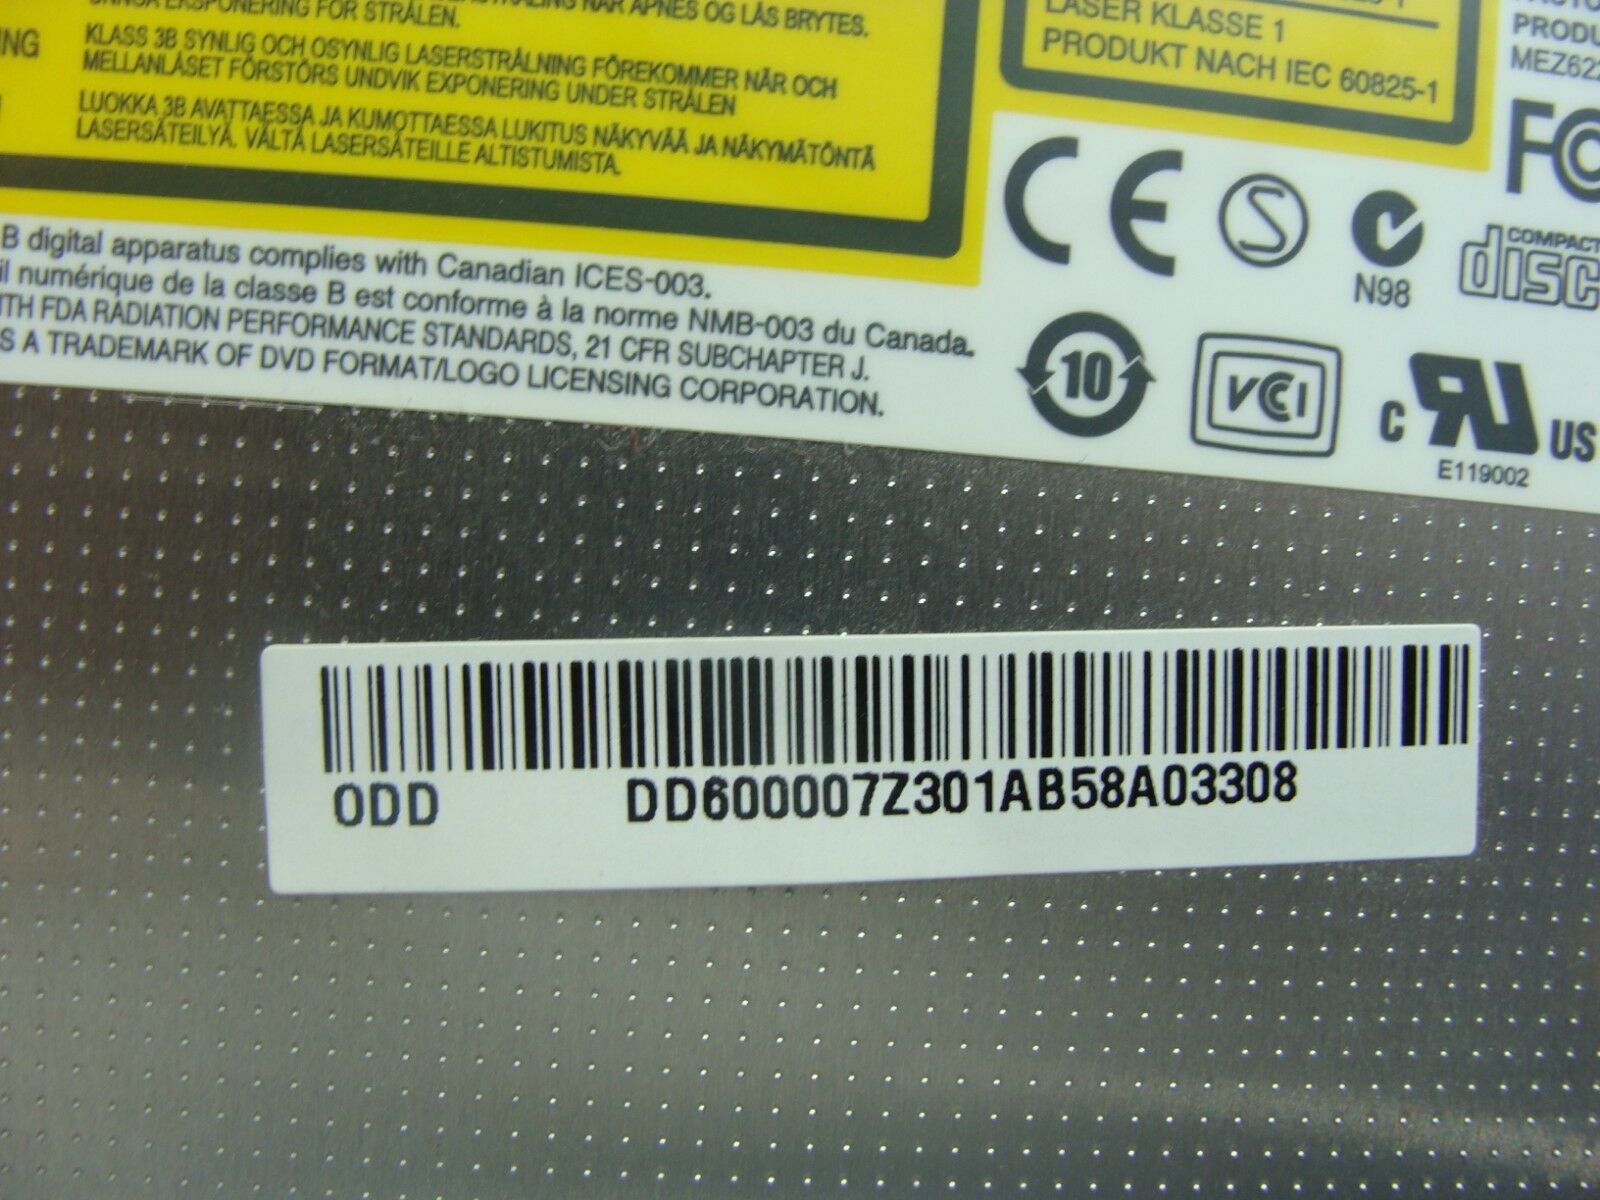 Asus ET2011E 20'' Genuine All in One Super Multi DVD-RW Burner Drive GT34N ASUS